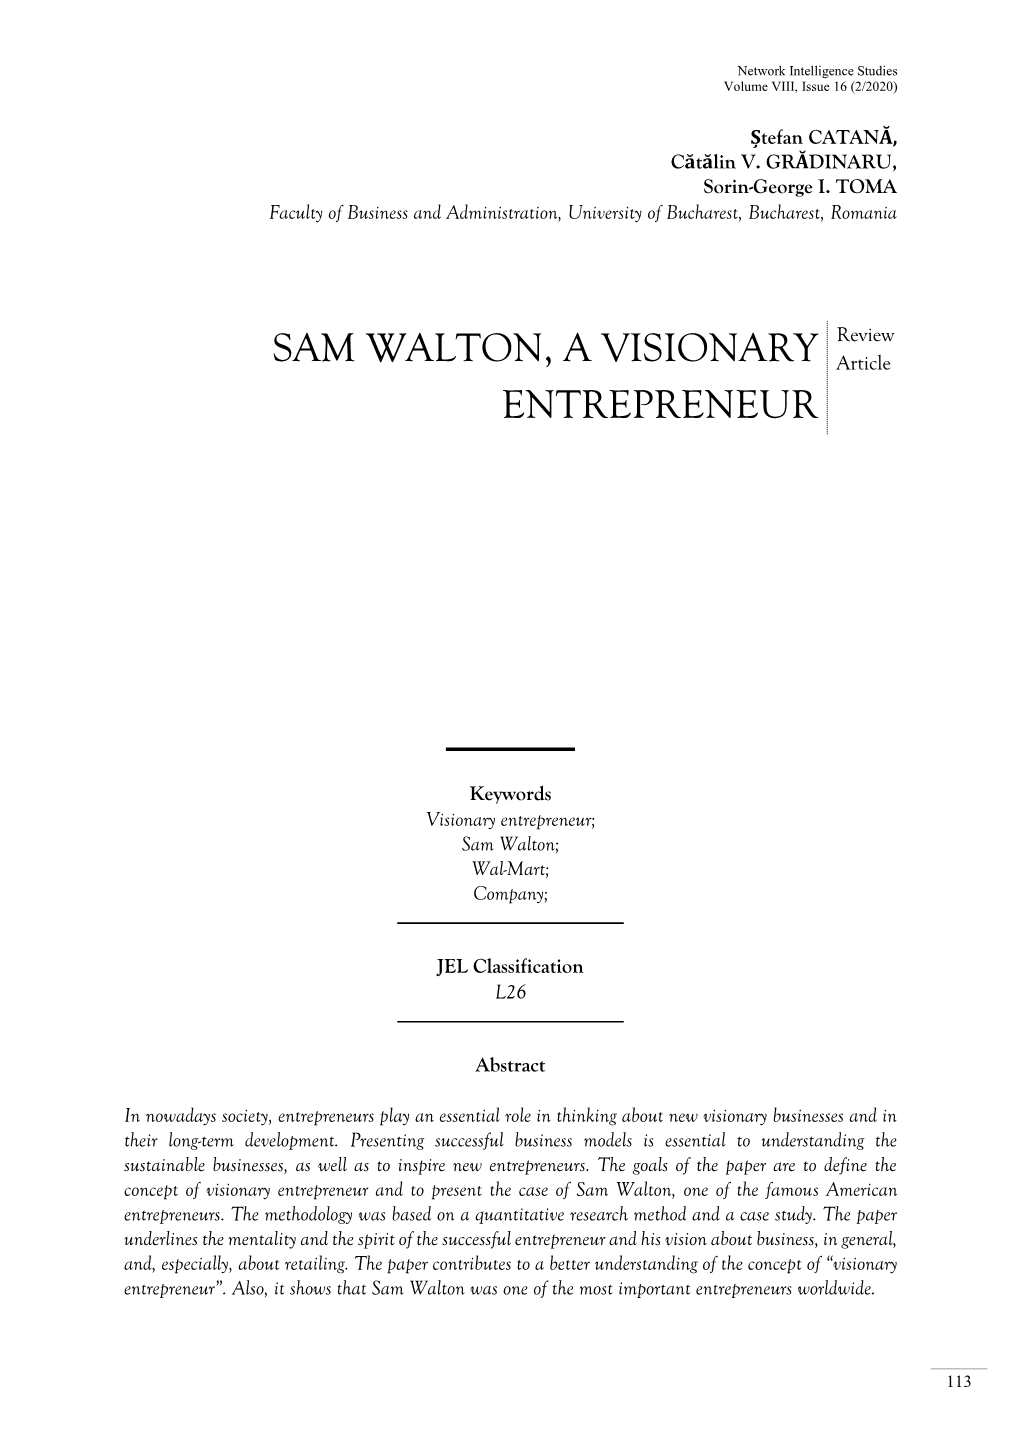 Sam Walton, a Visionary Entrepreneur